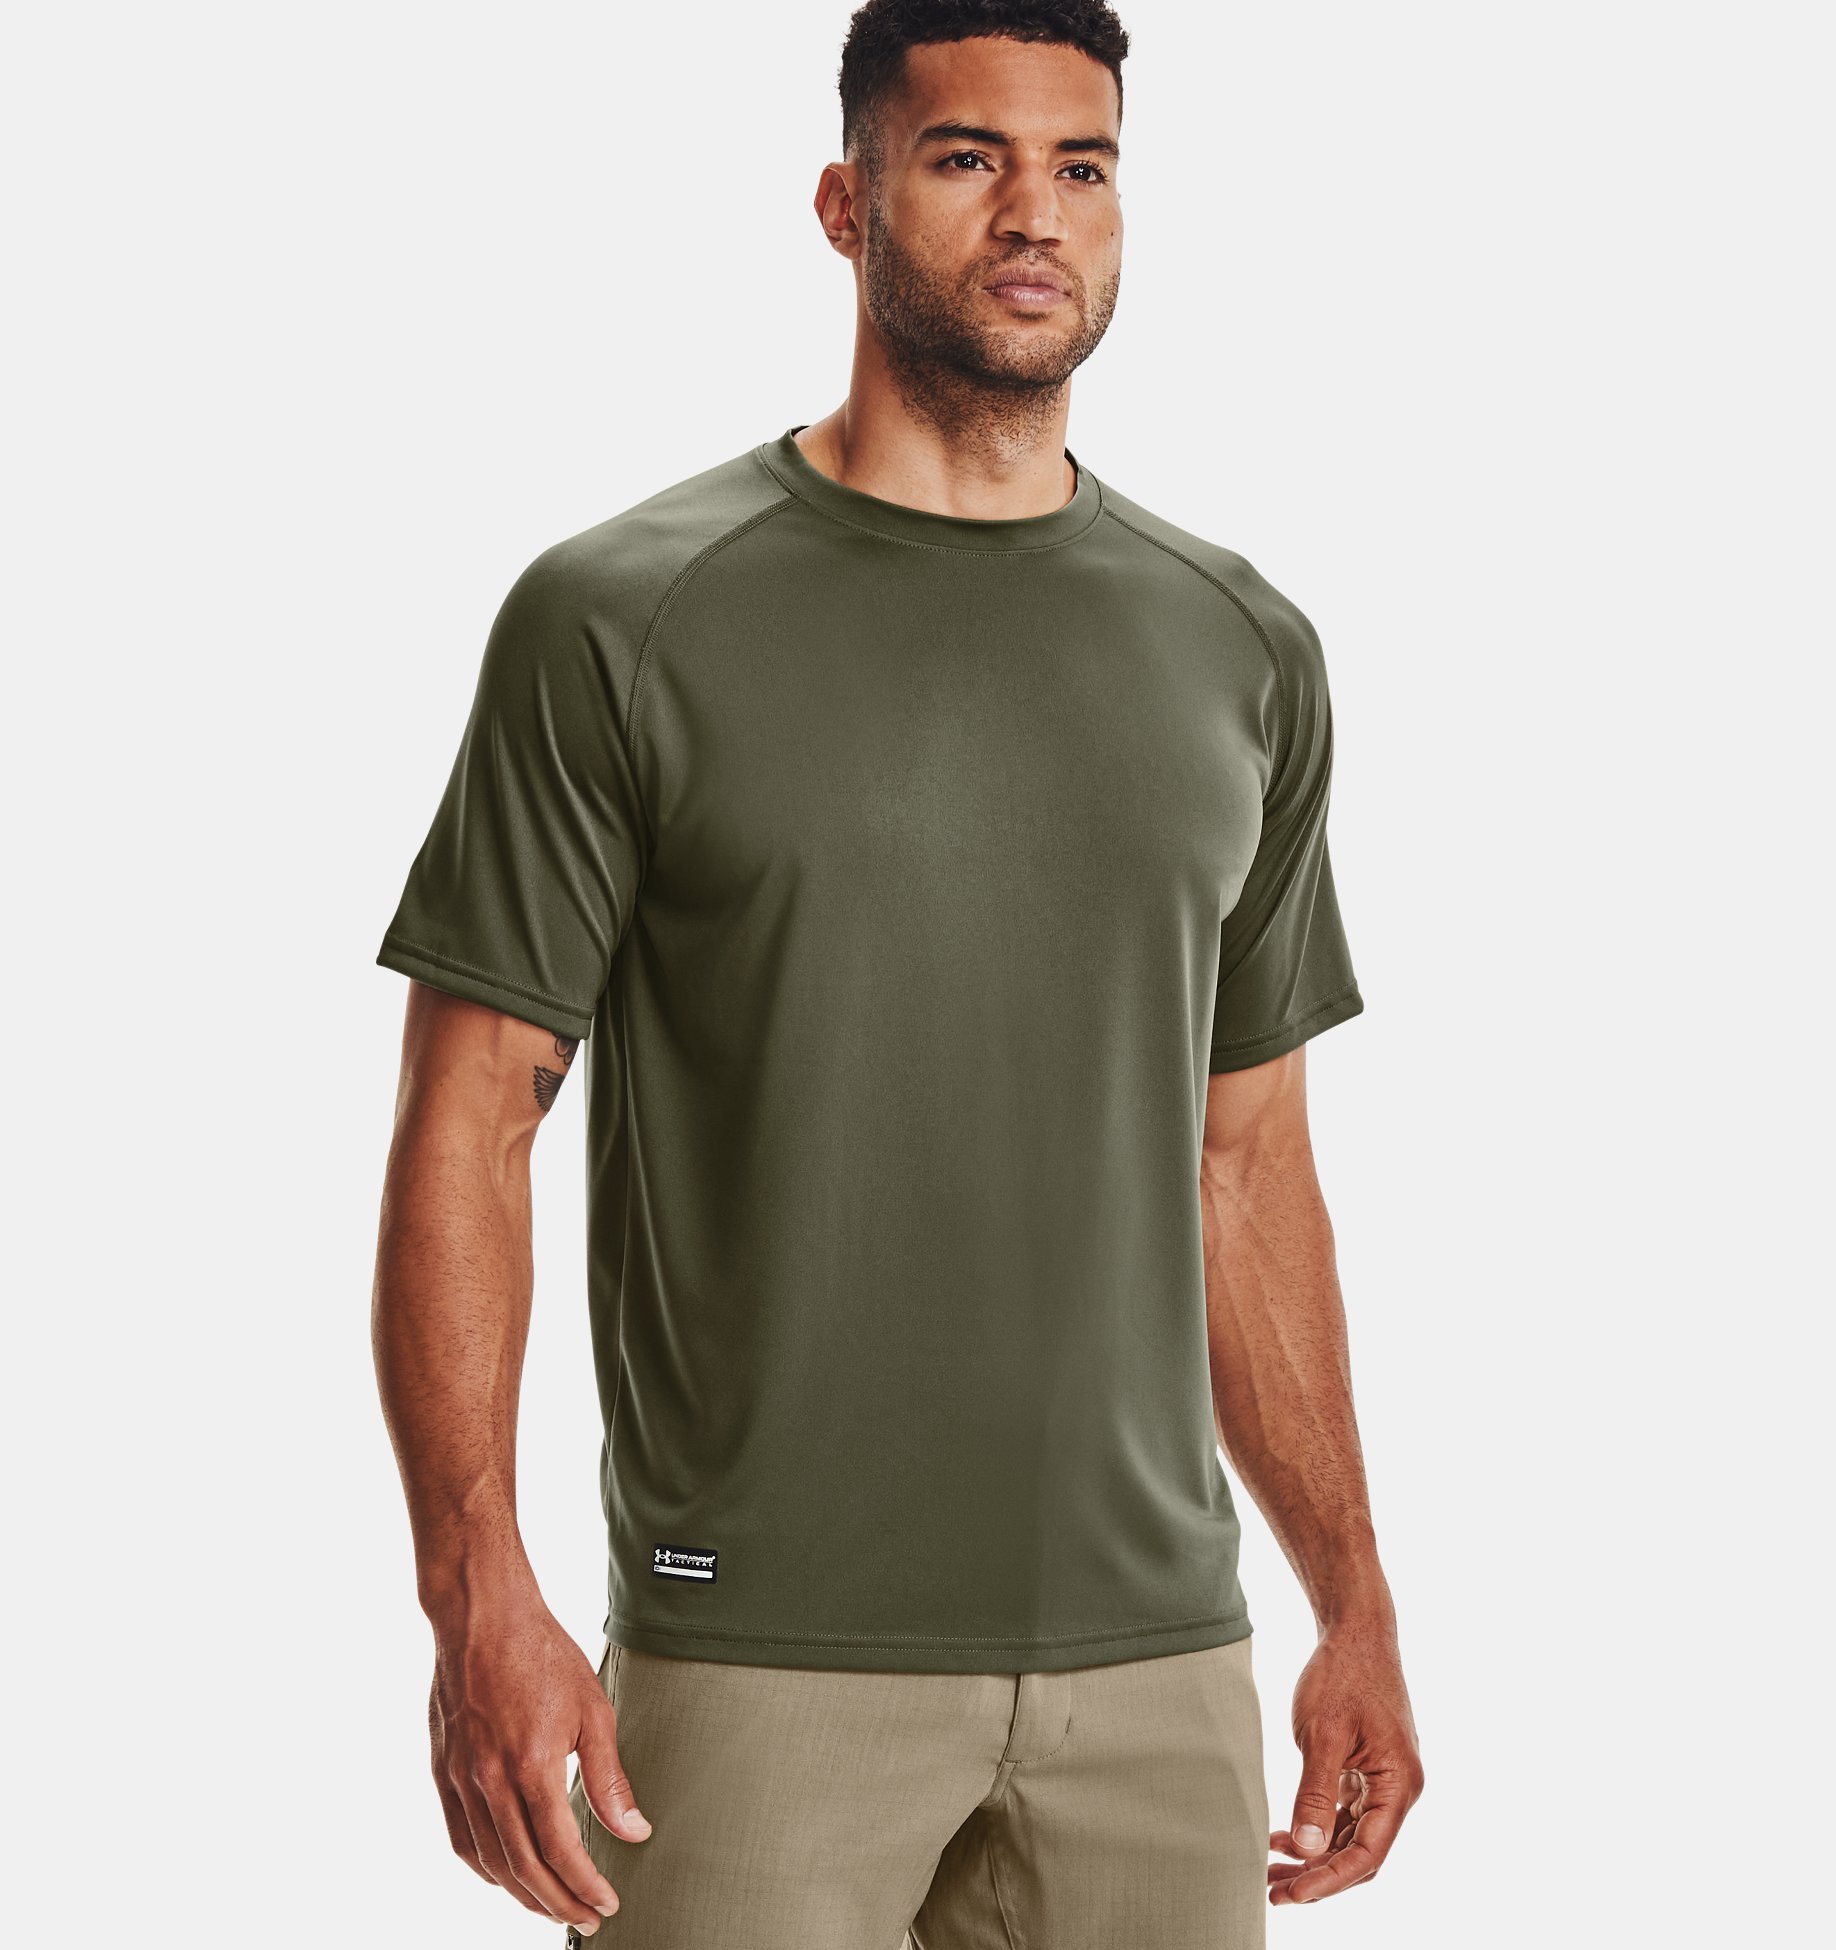 Men's Under Armour Tech™ Shortsleeve T-Shirt from Under Armour 